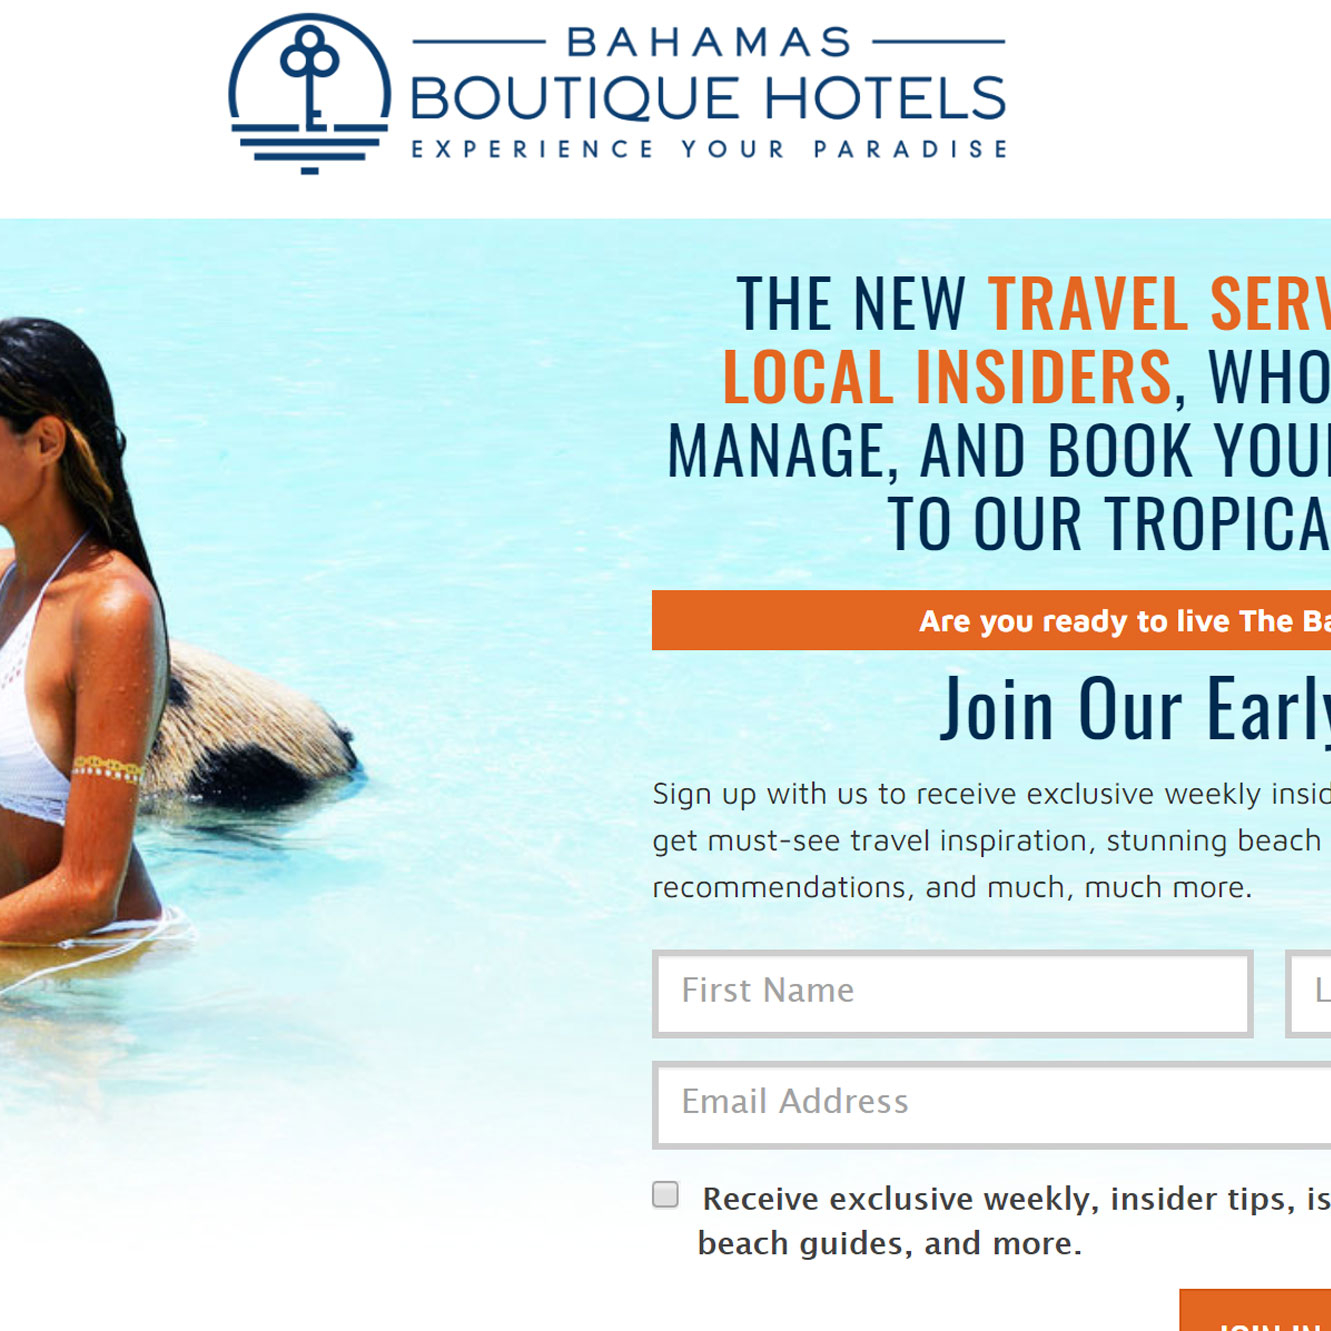 Bahamas Boutique Hotels